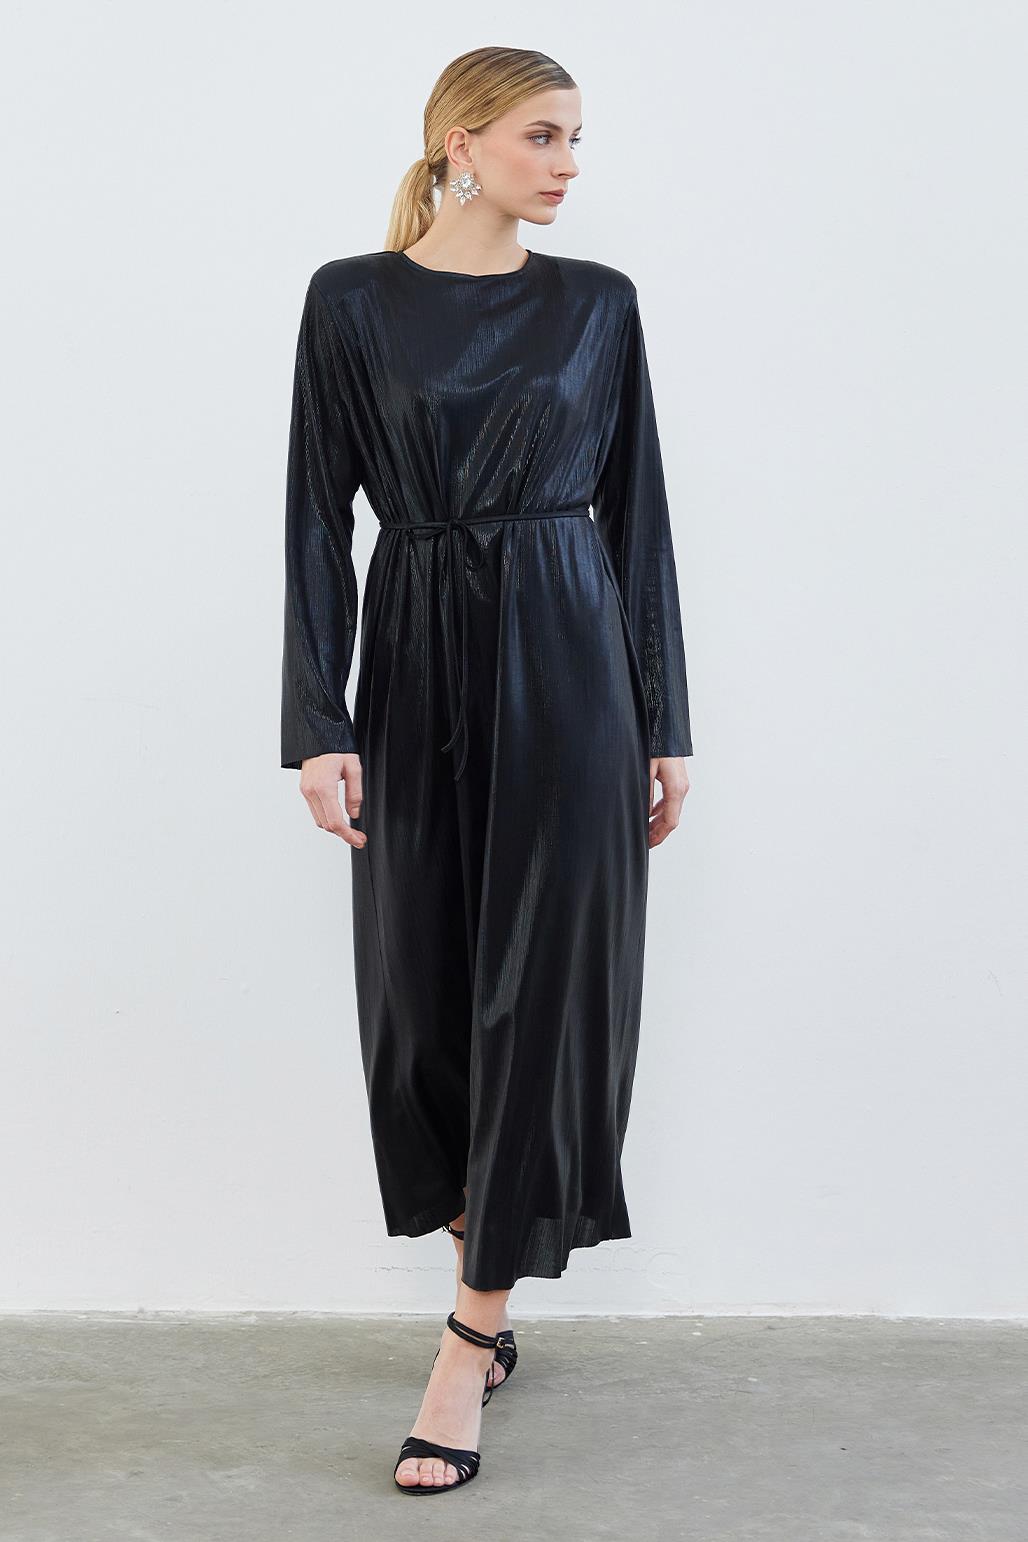 Tiana Padded Dress Black